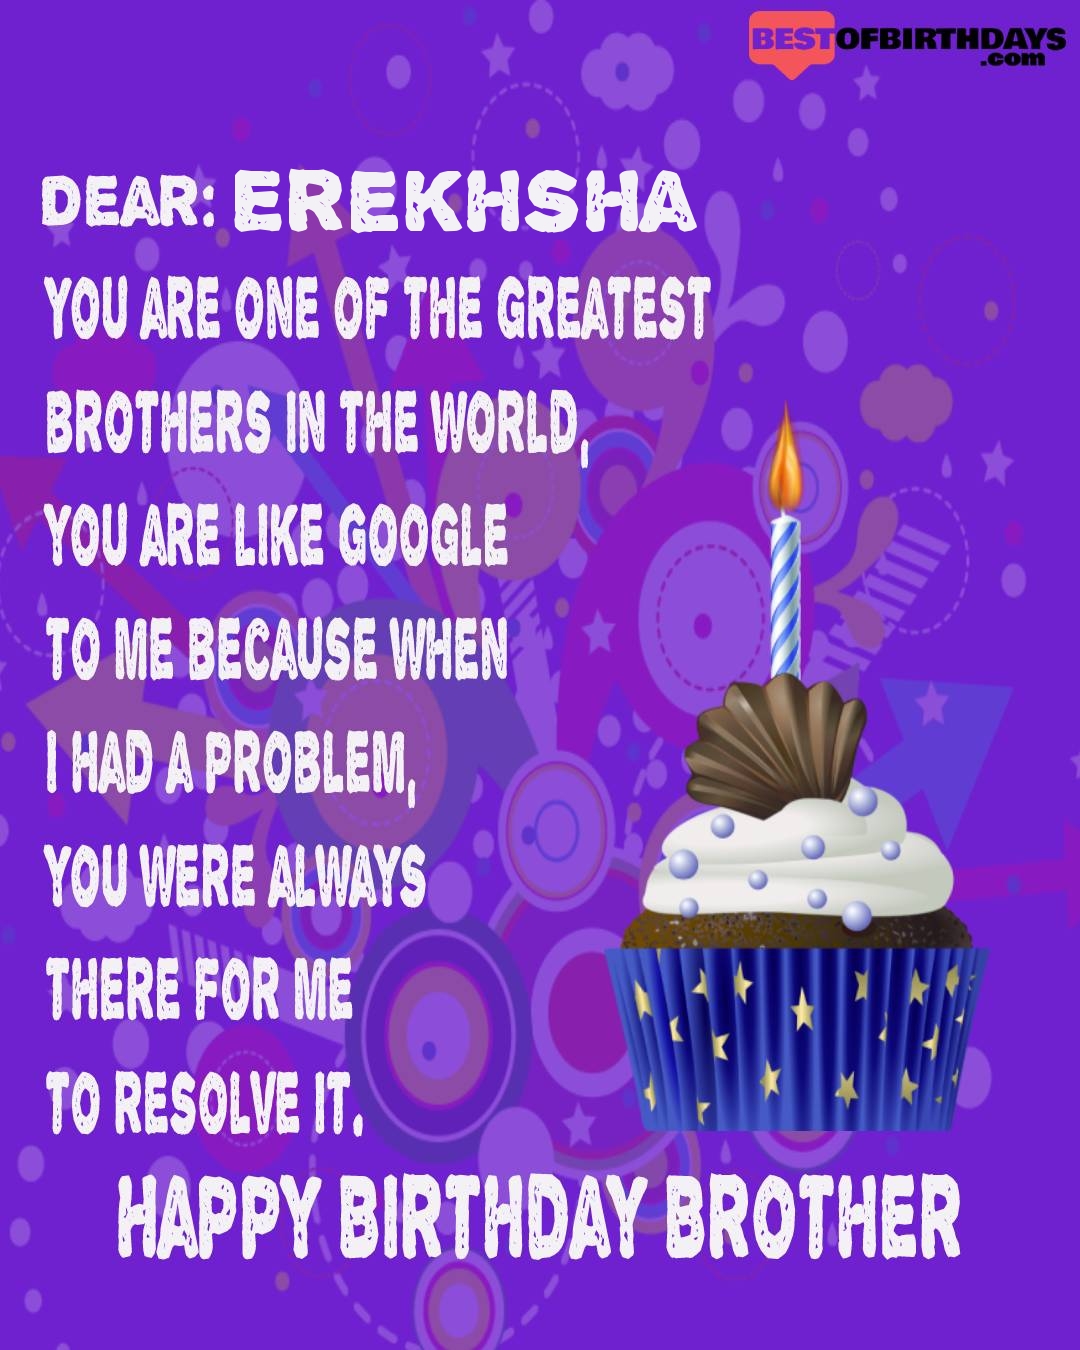 Happy birthday erekhsha bhai brother bro